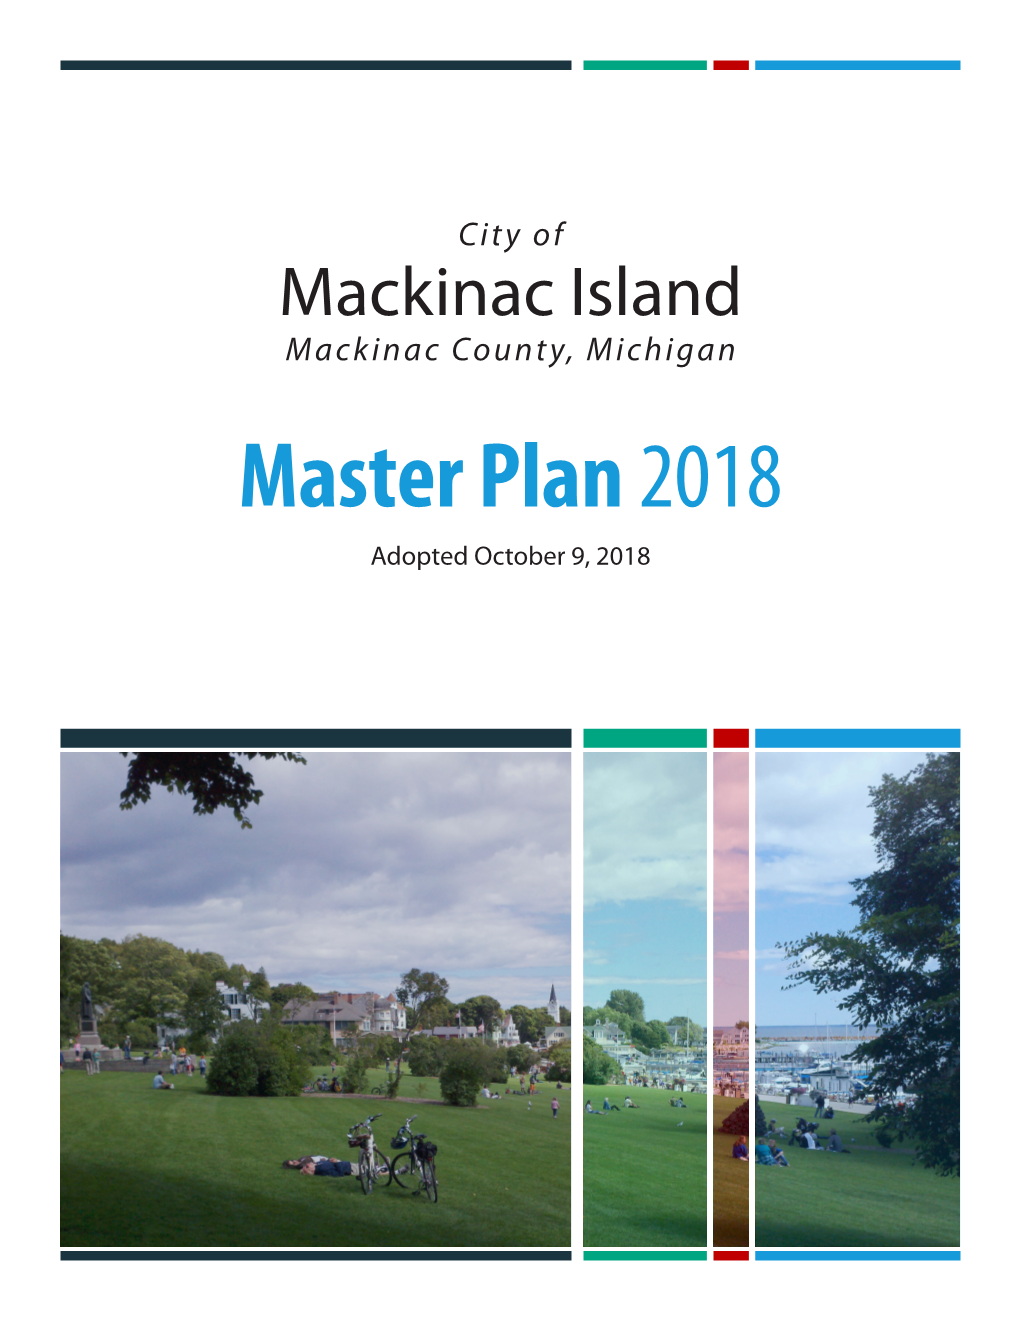 City of Mackinac Island Master Plan 2018